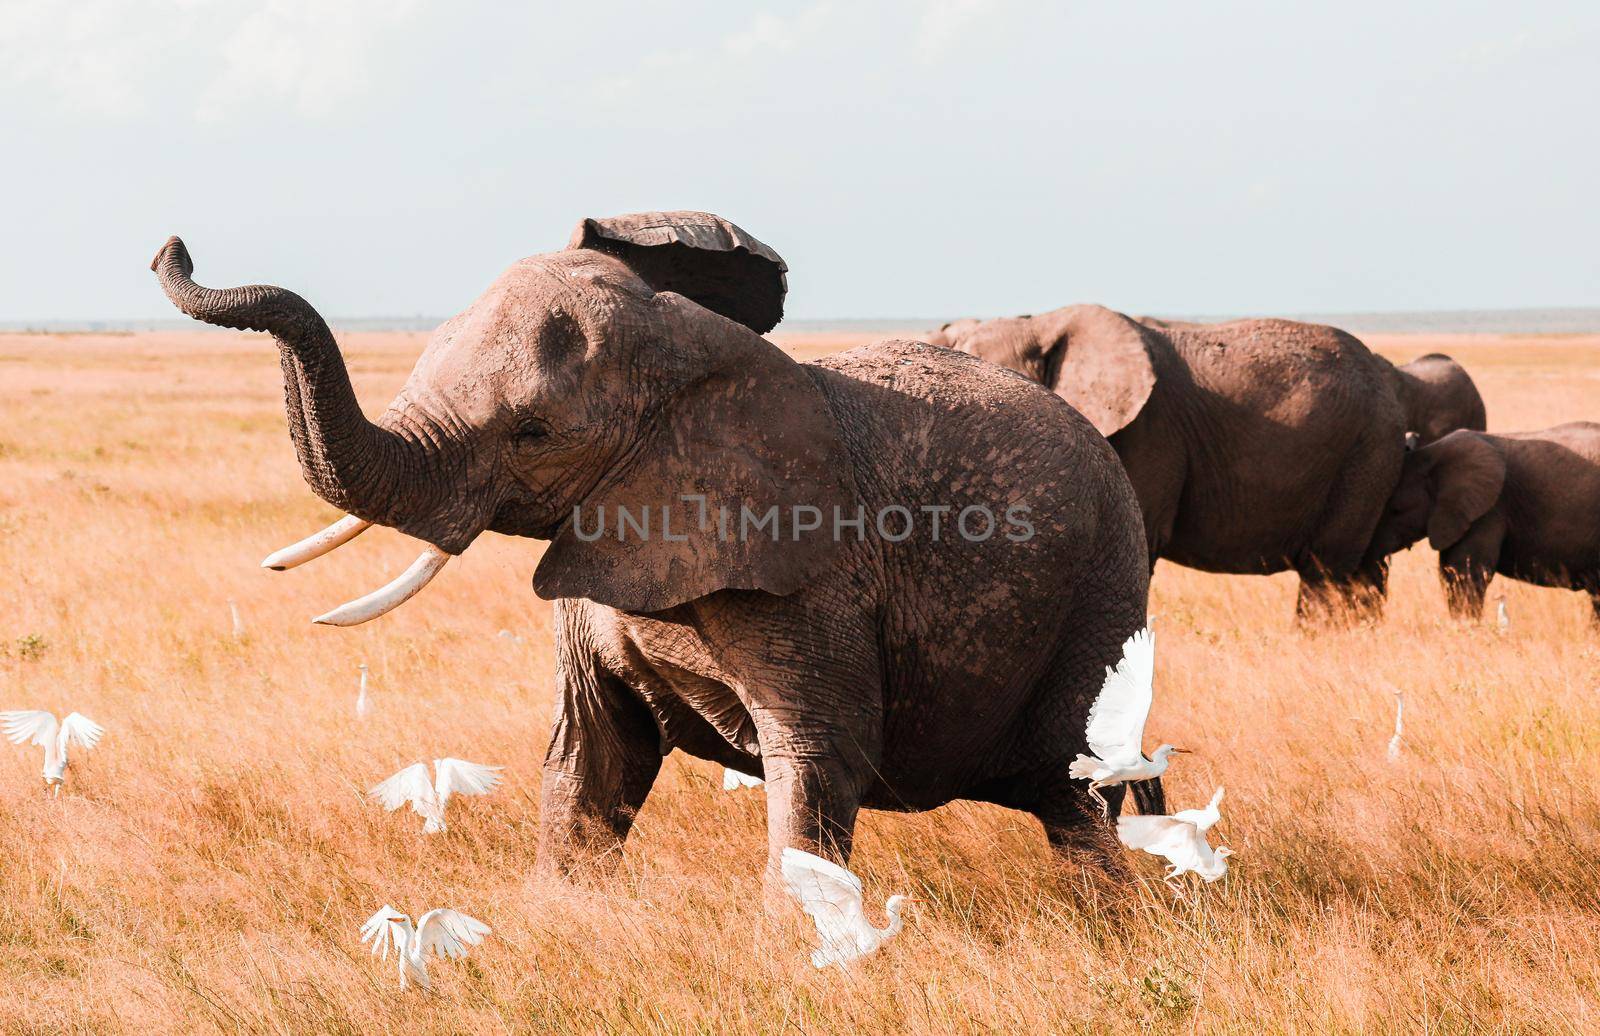 Elephants in Amboseli Nationalpark, Kenya, Africa  by Weltblick